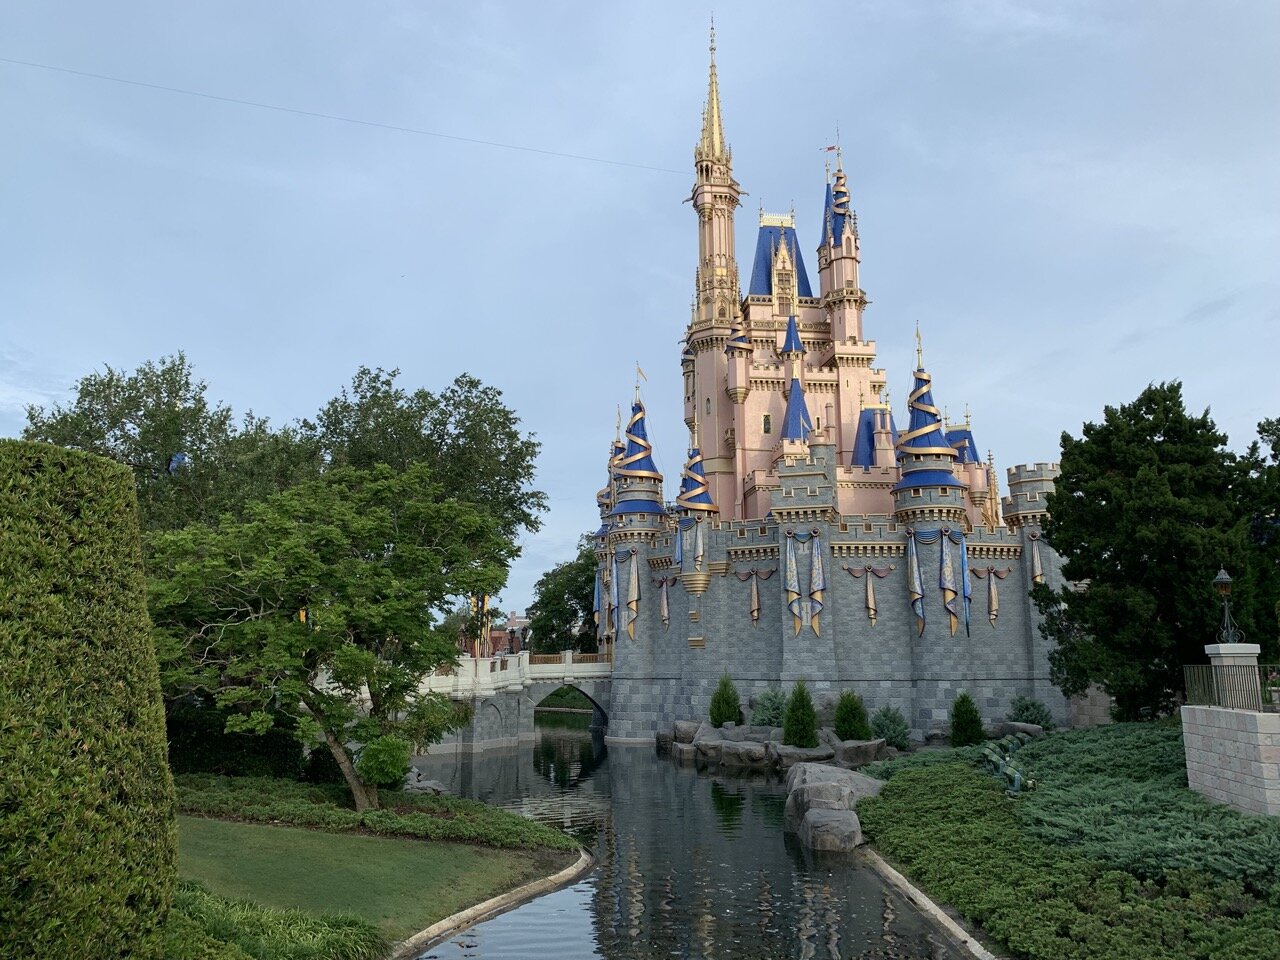 10 Best Walt Disney World Souvenirs The Magic For Less Travel Blog